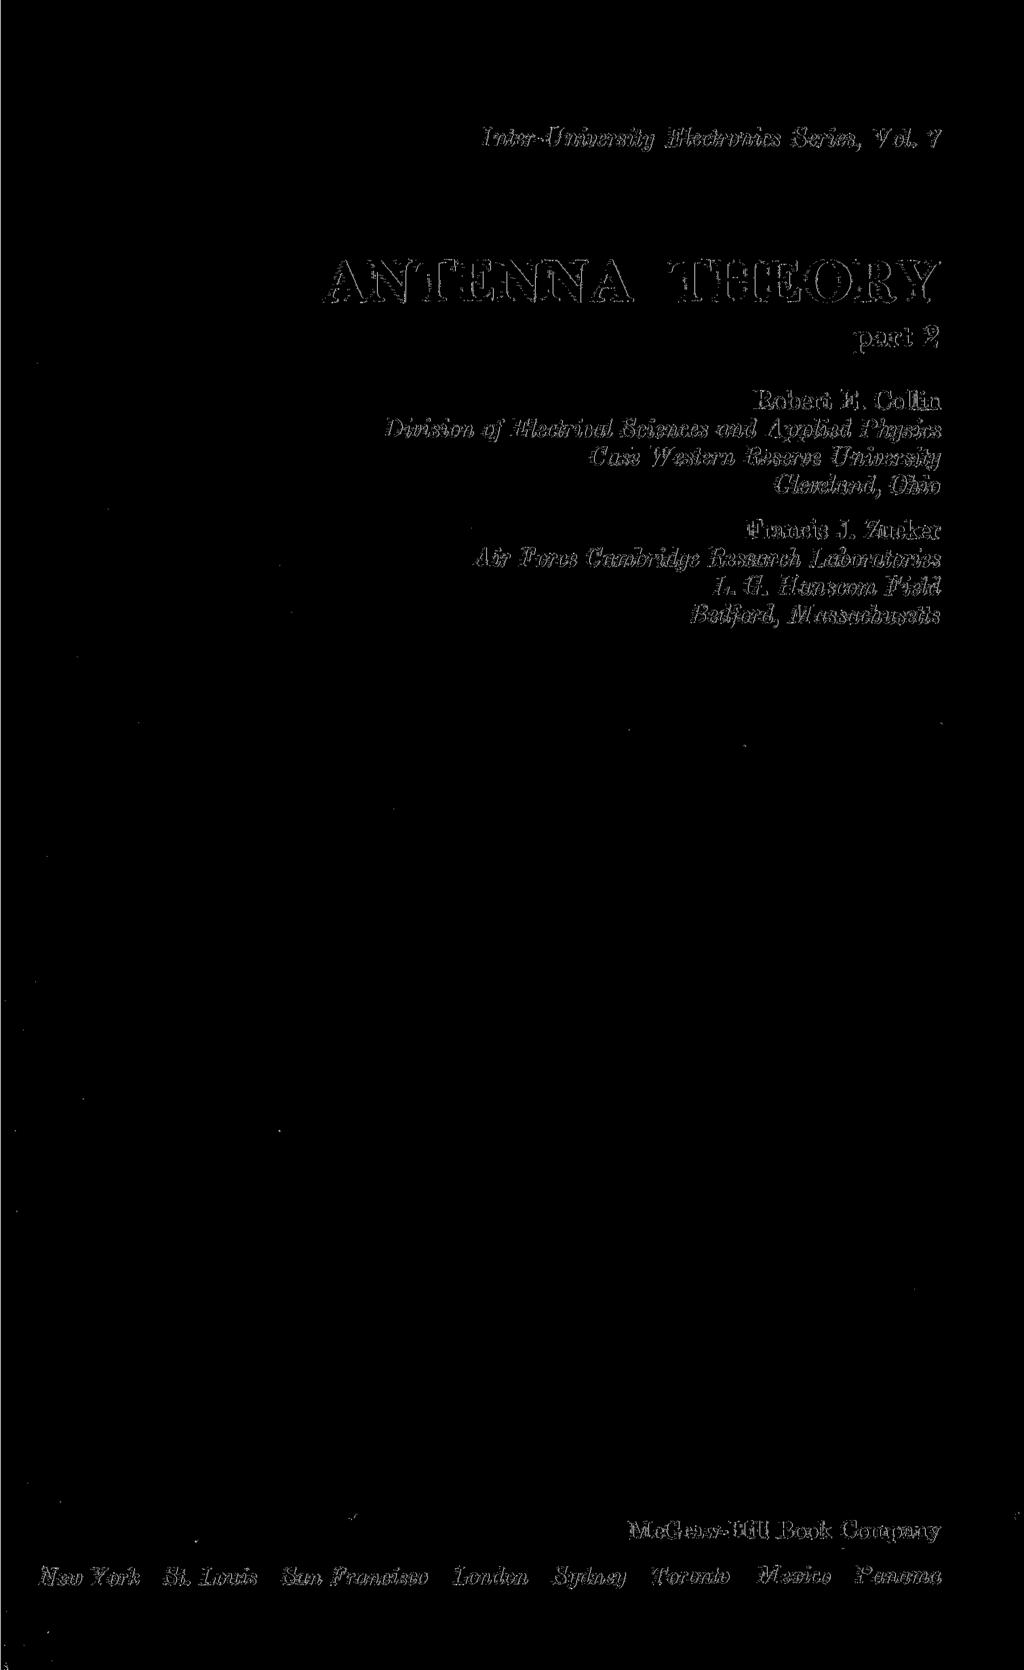 Inter-University Electronics Series, Vol. 7 ANTENNA THEORY part 2 Robert E.